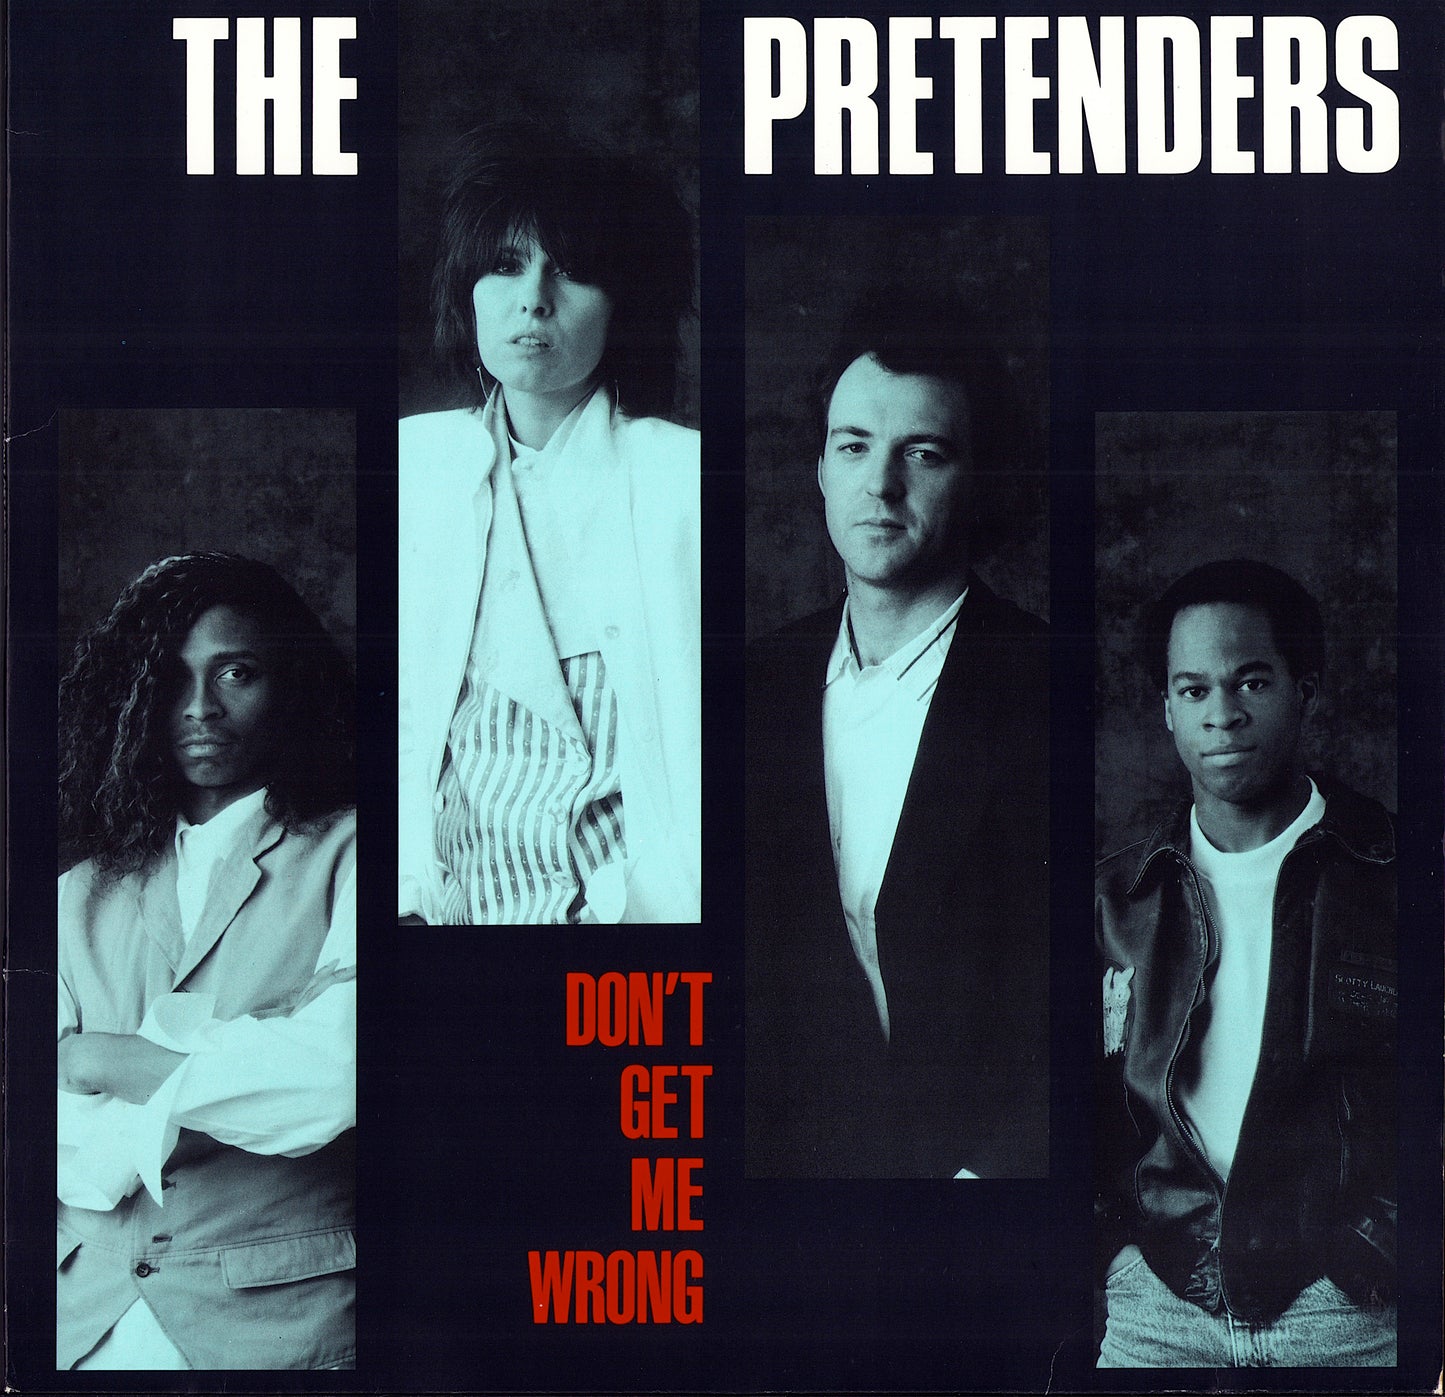 The Pretenders - Don't Get Me Wrong (Vinyl 12")